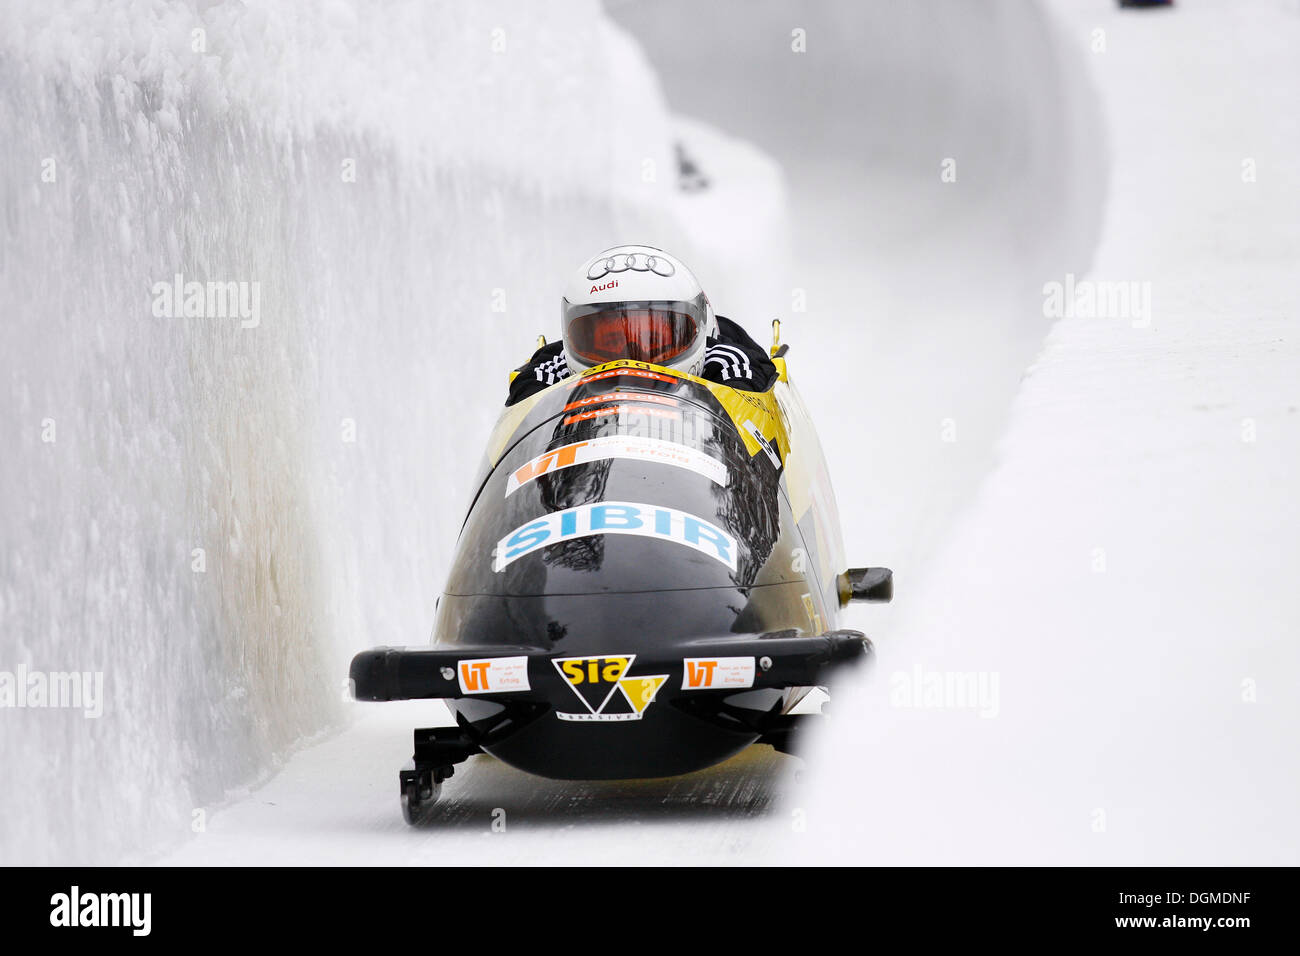 Swiss bobsled, natural ice rink, World Cup St. Moritz 2010, Engadin, Switzerland, Europe Stock Photo